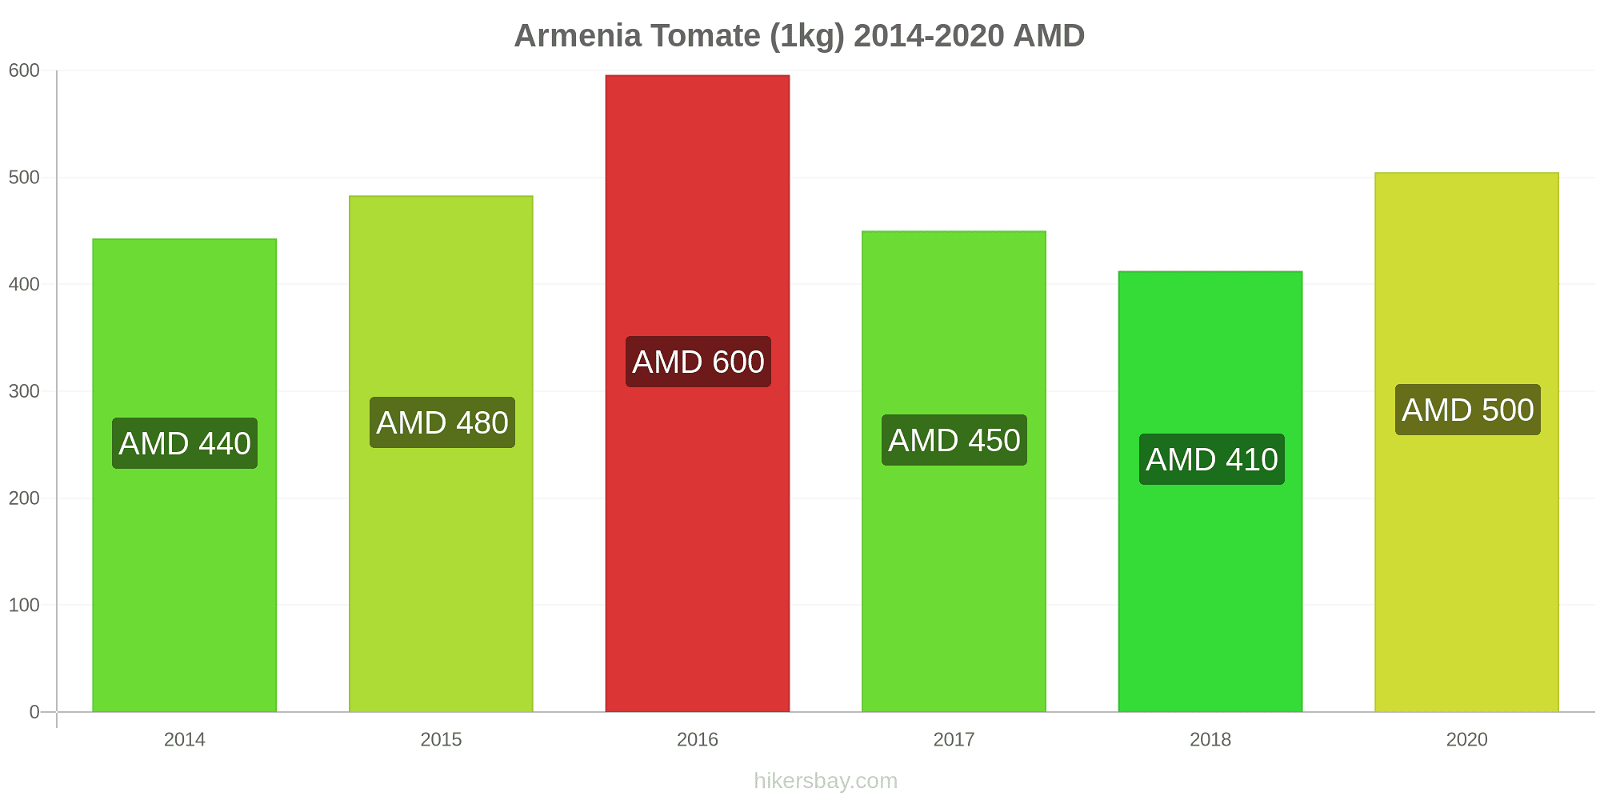 Armenia cambios de precios Tomate (1kg) hikersbay.com